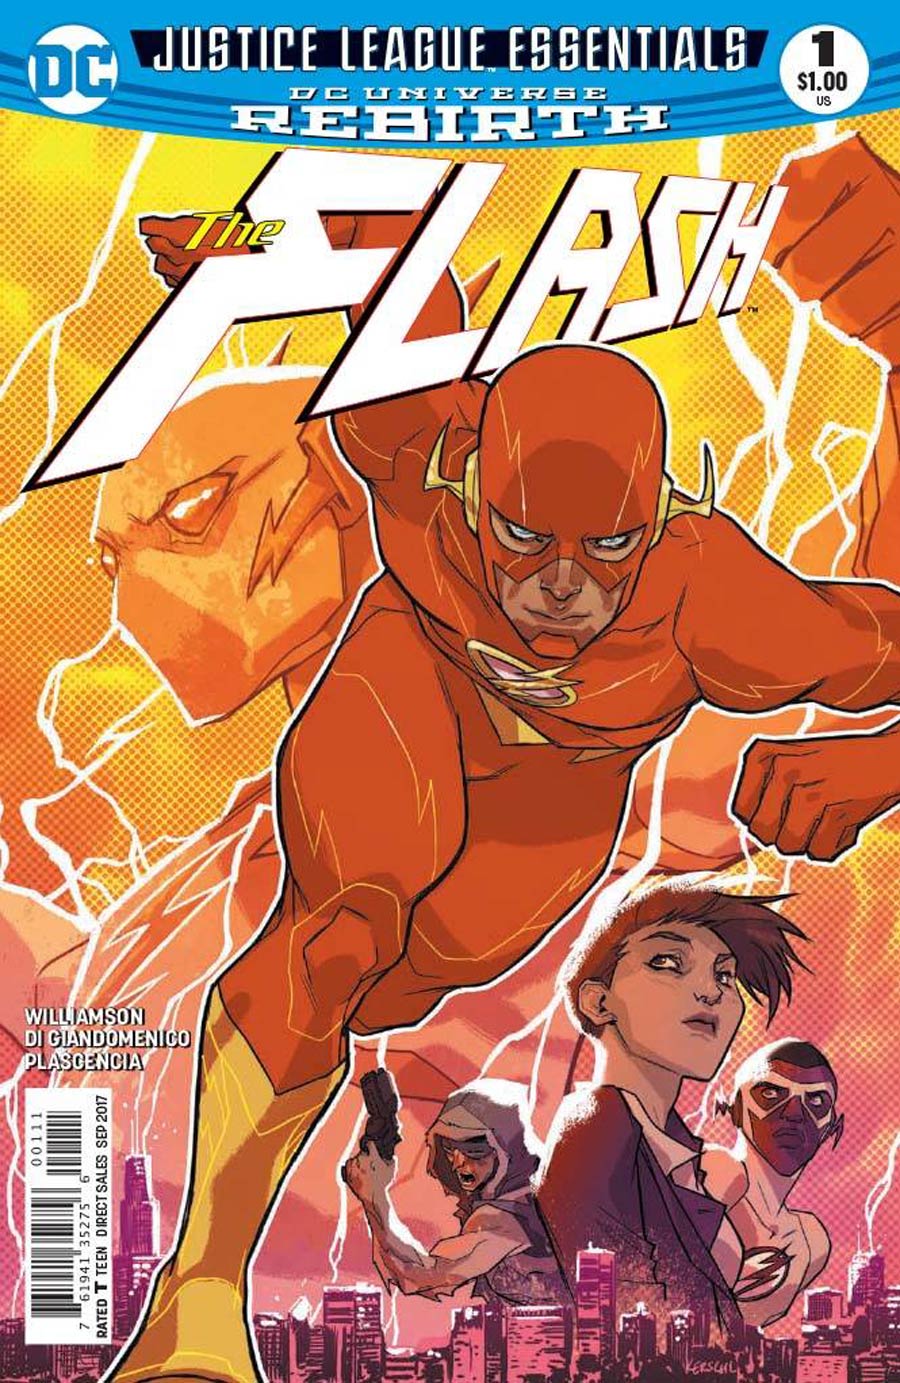 DC Justice League Essentials Flash #1 (Rebirth)